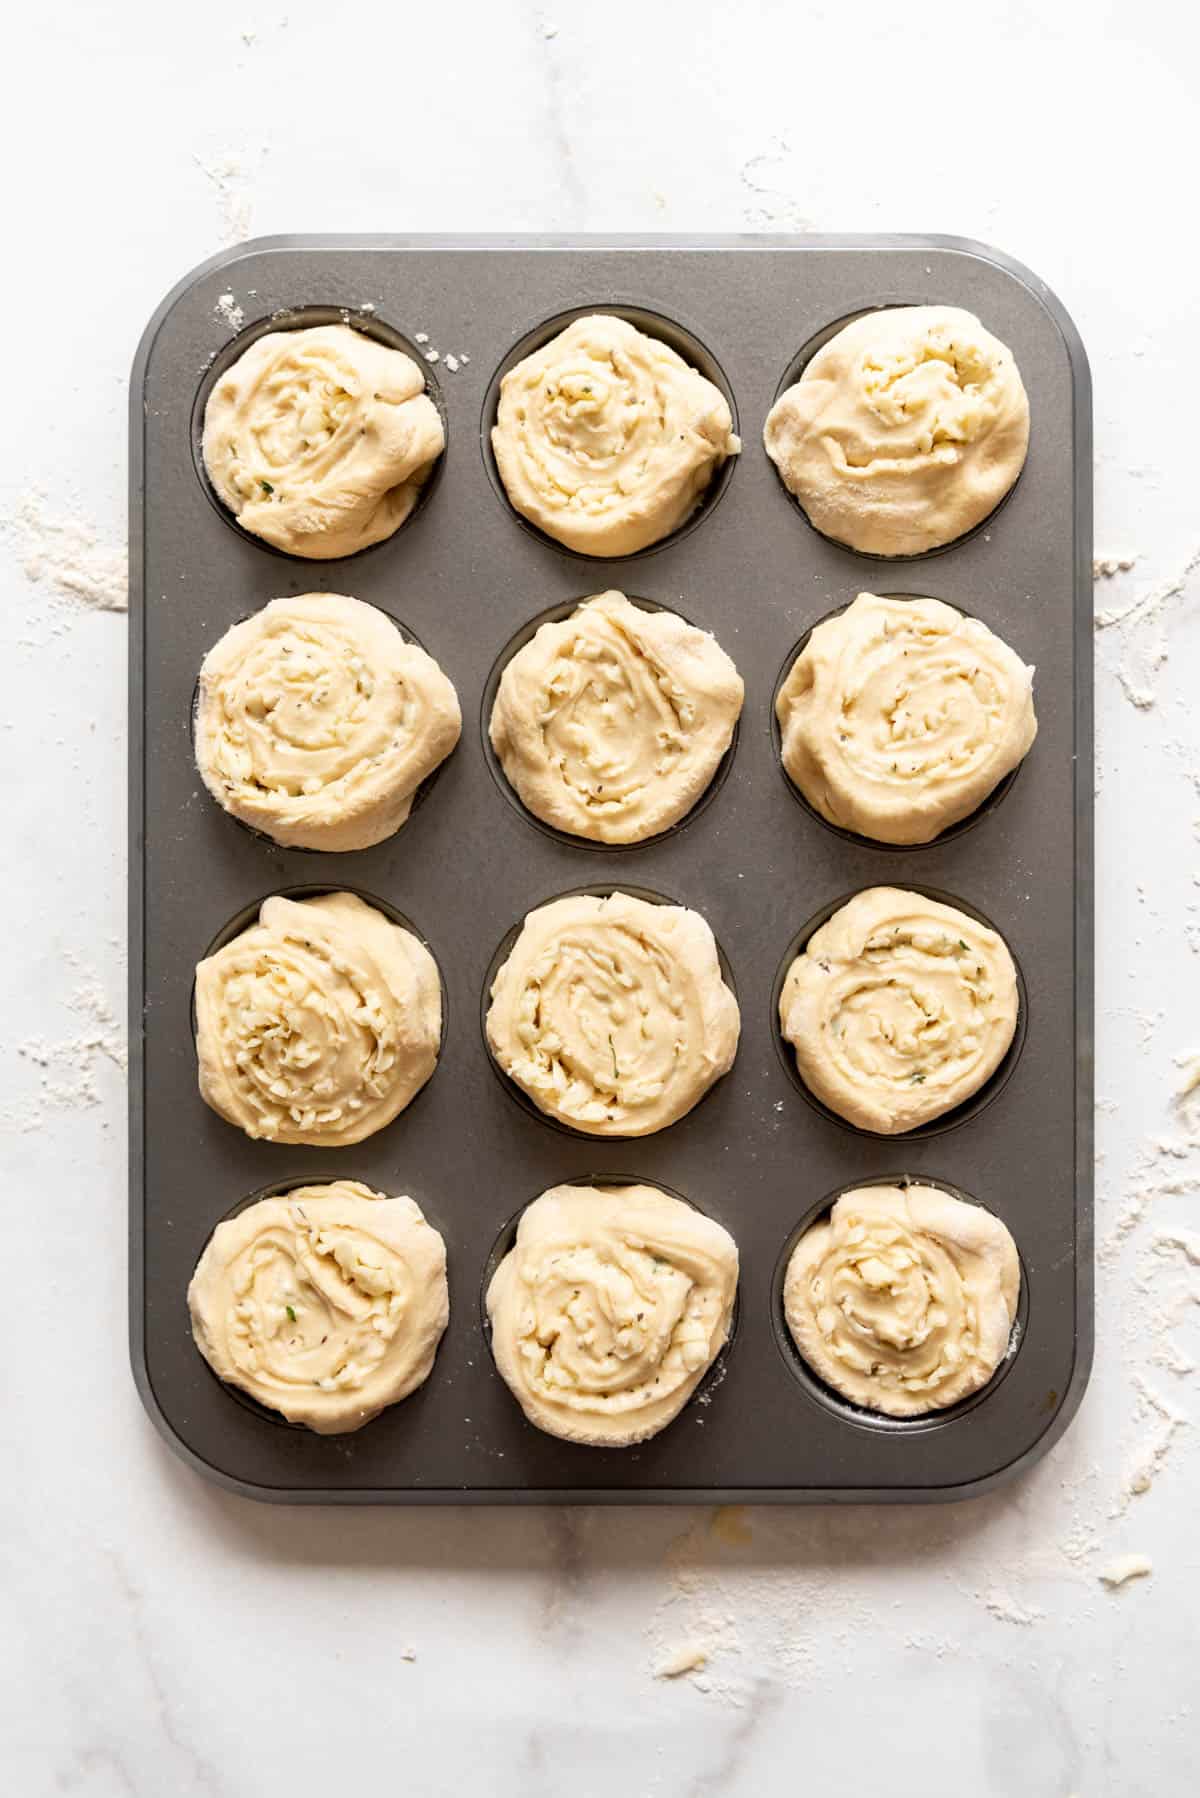 Shaped cheesy garlic mozzarella swirl rolls in a muffin pan before baking.